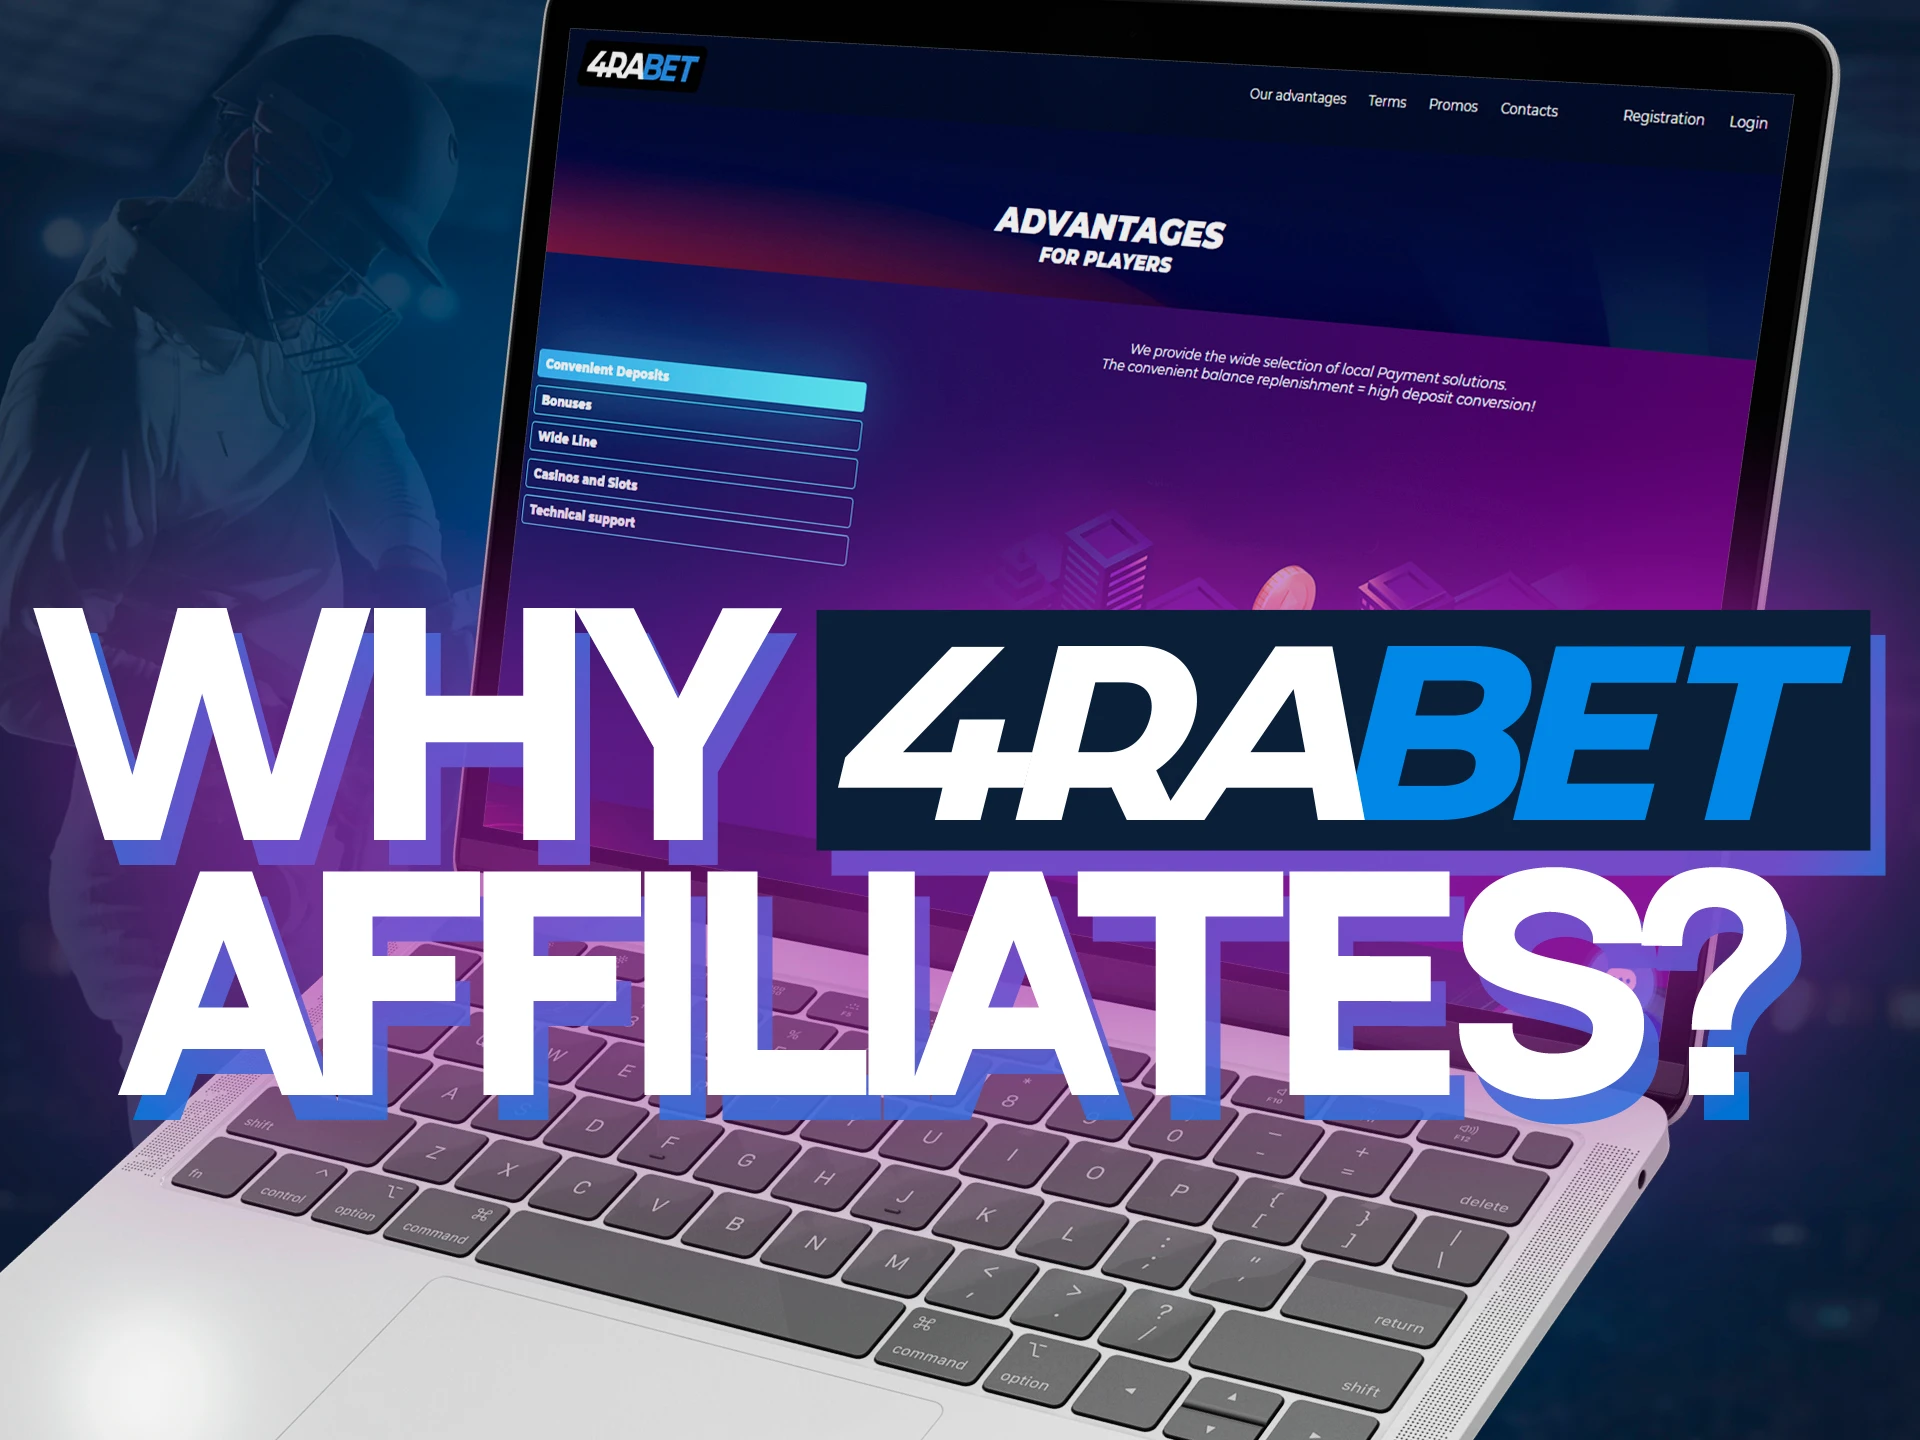 Choose 4rabet affiliate program and get best bonuses on the market.